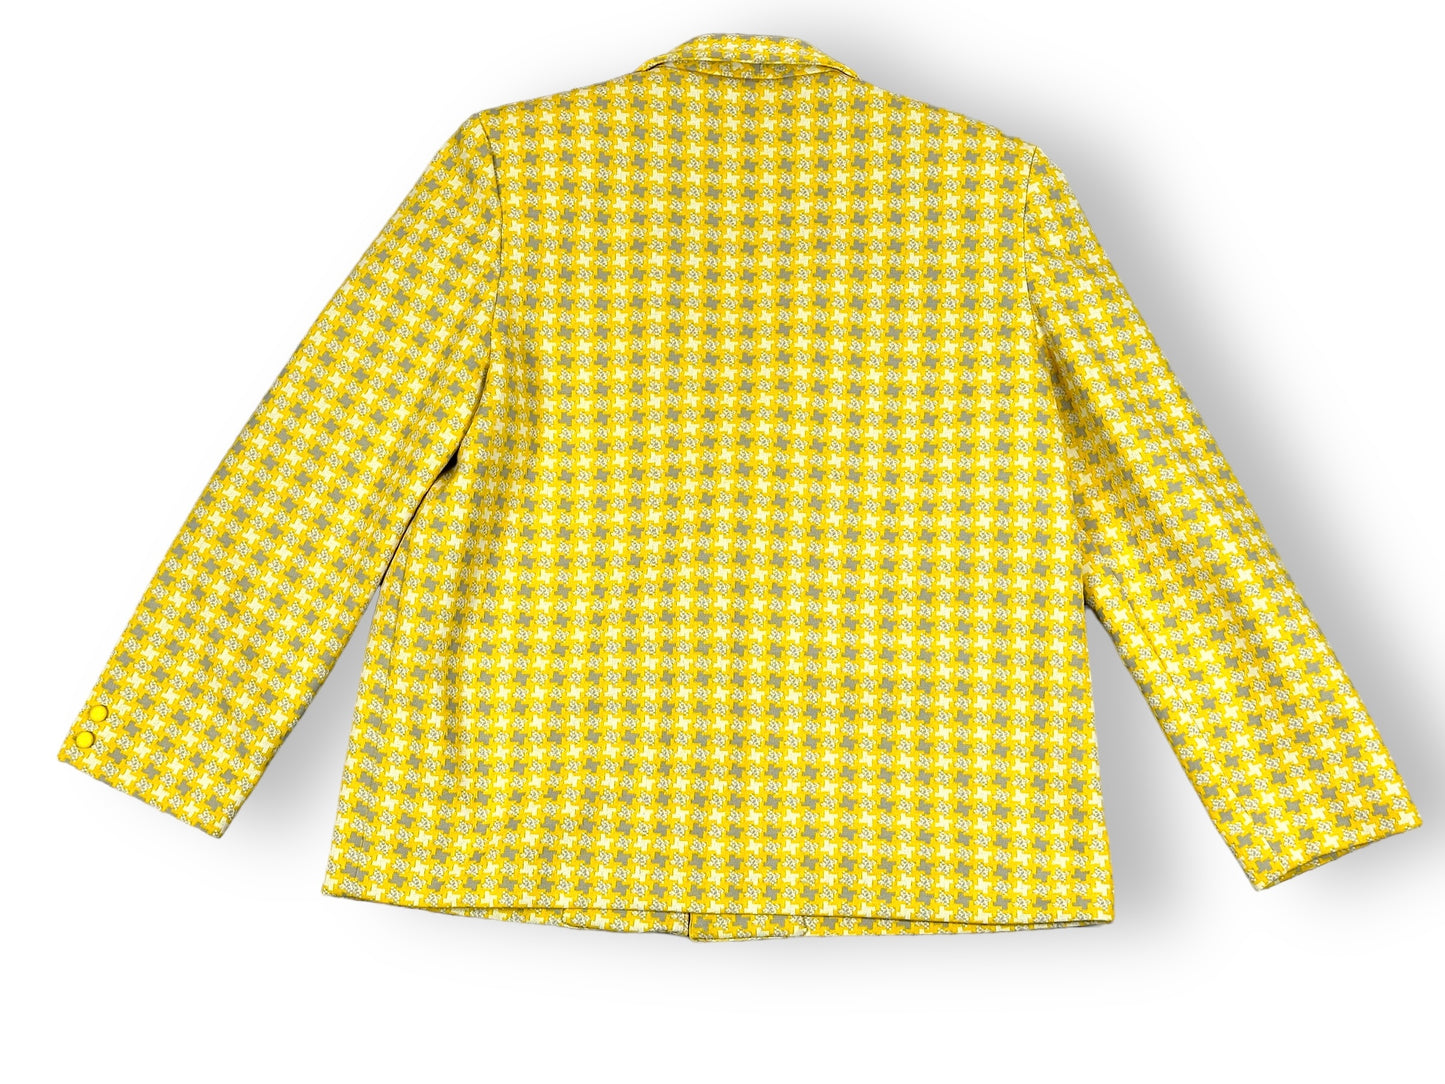 1950s Yellow + Gray Leisure Jacket